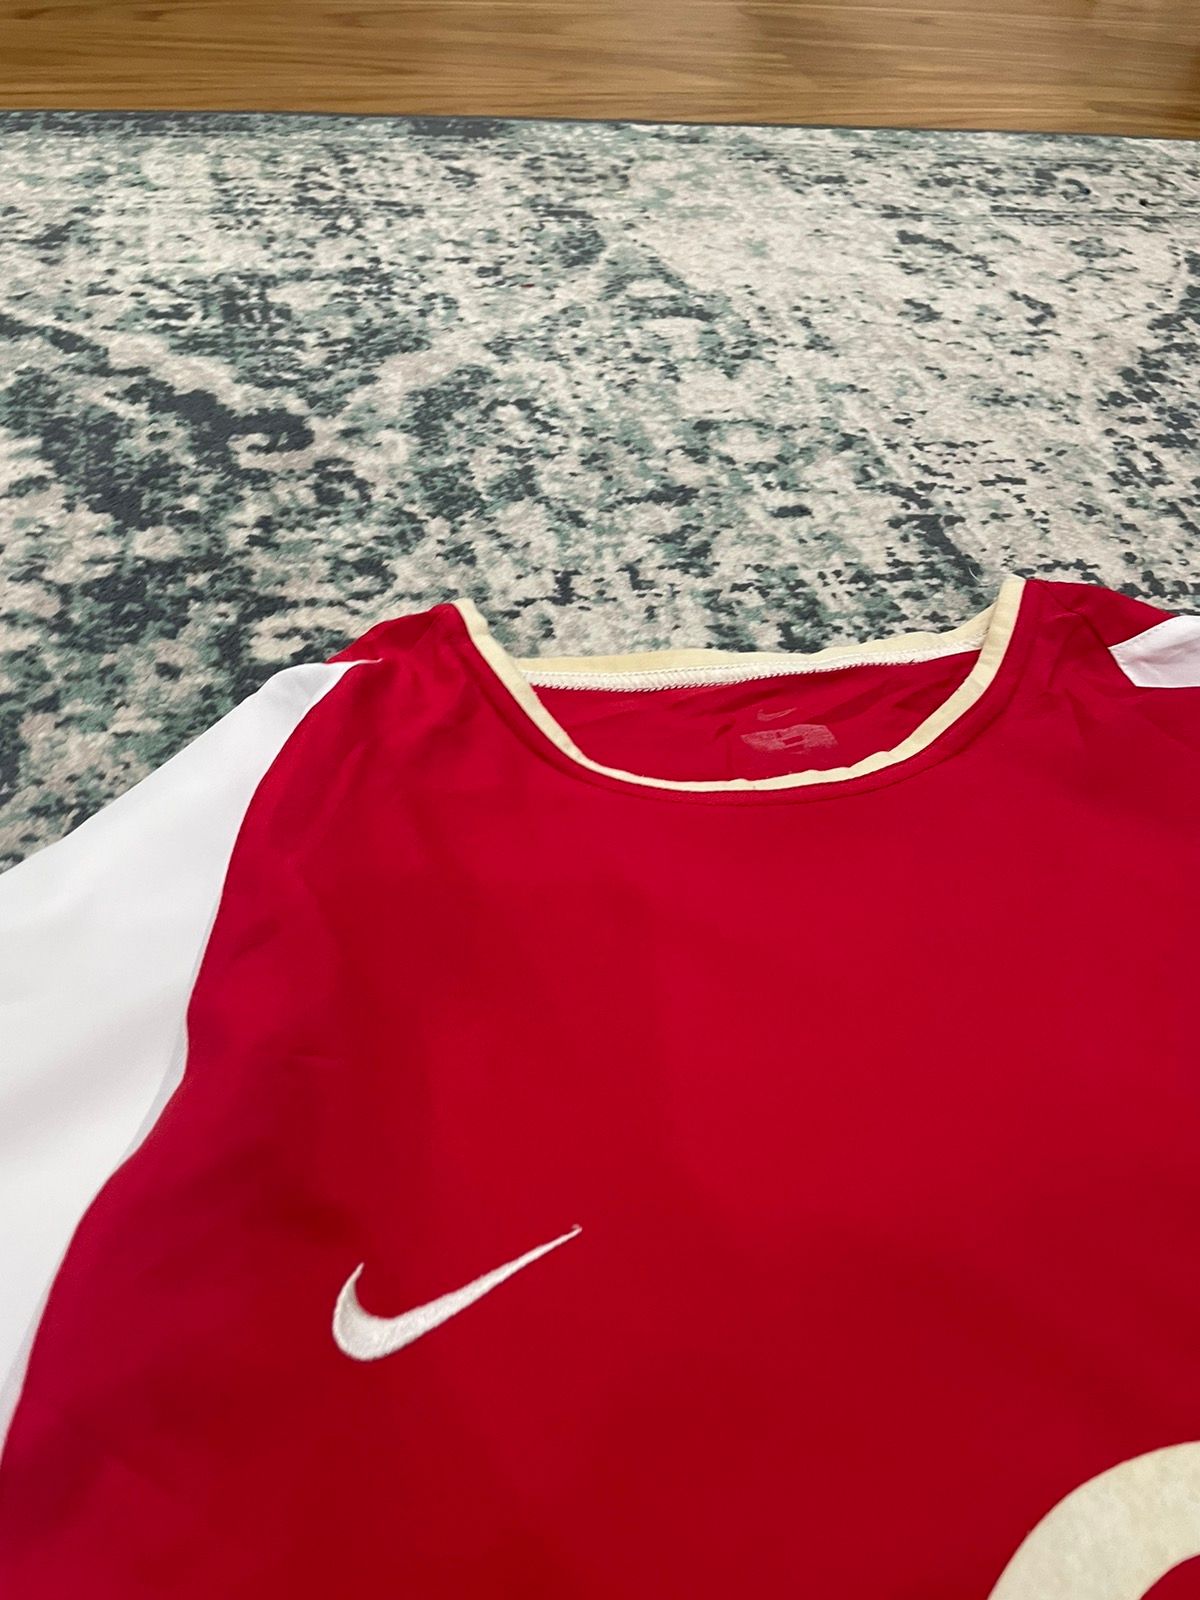 Arsenal 02/03 Vintage Jersey - 7